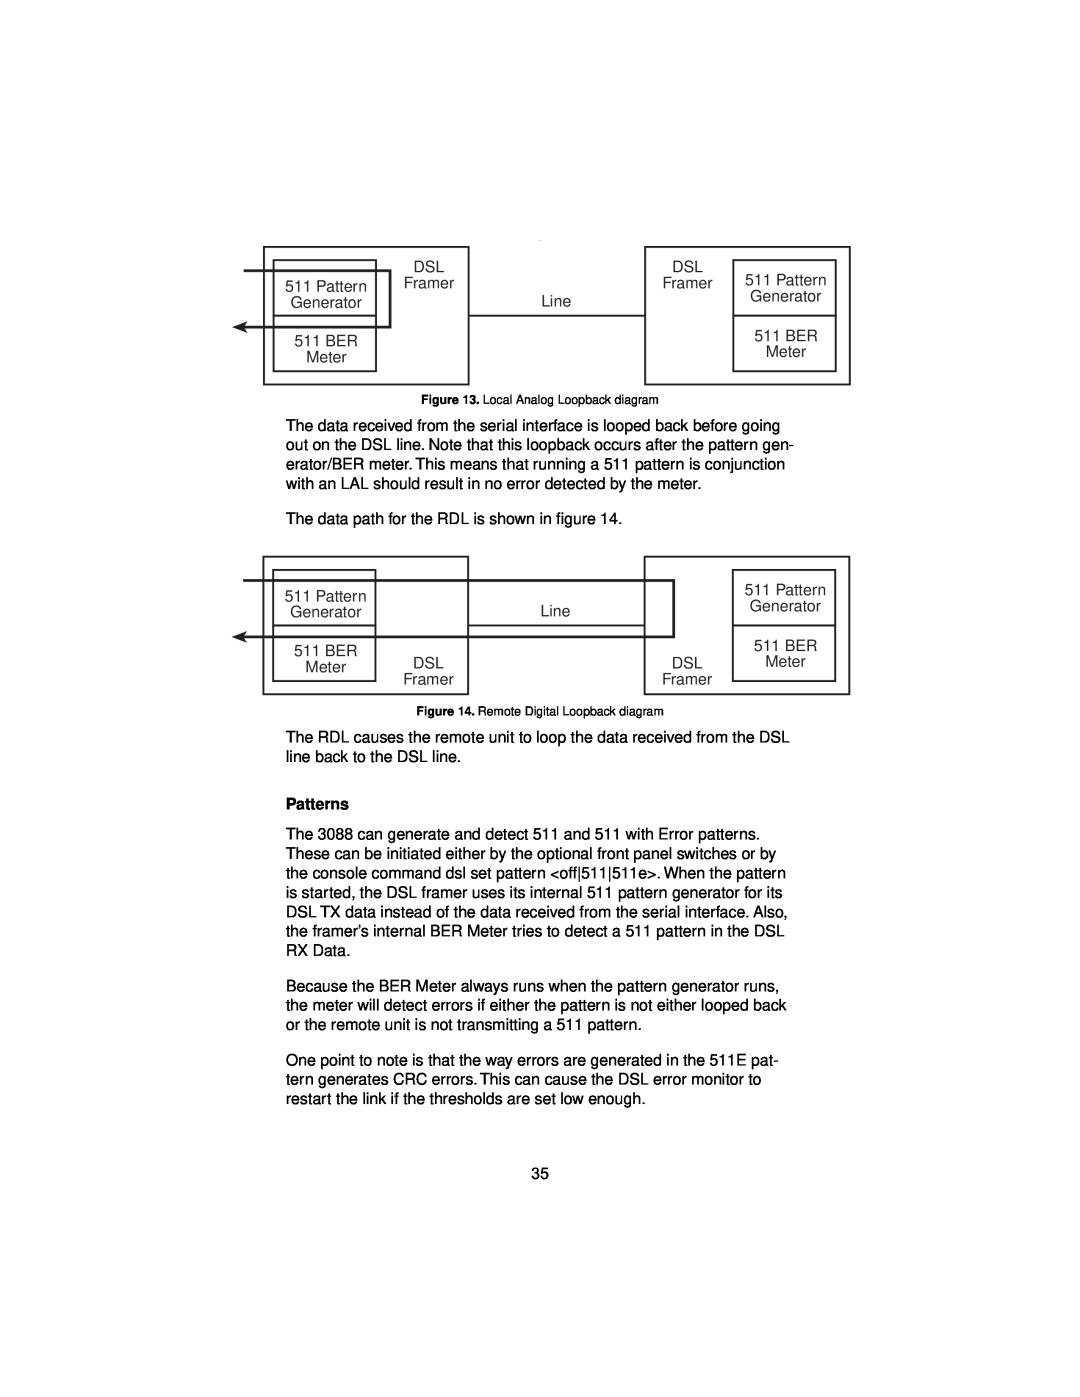 Patton electronic 3088 user manual Patterns, Local Analog Loopback diagram, Remote Digital Loopback diagram 